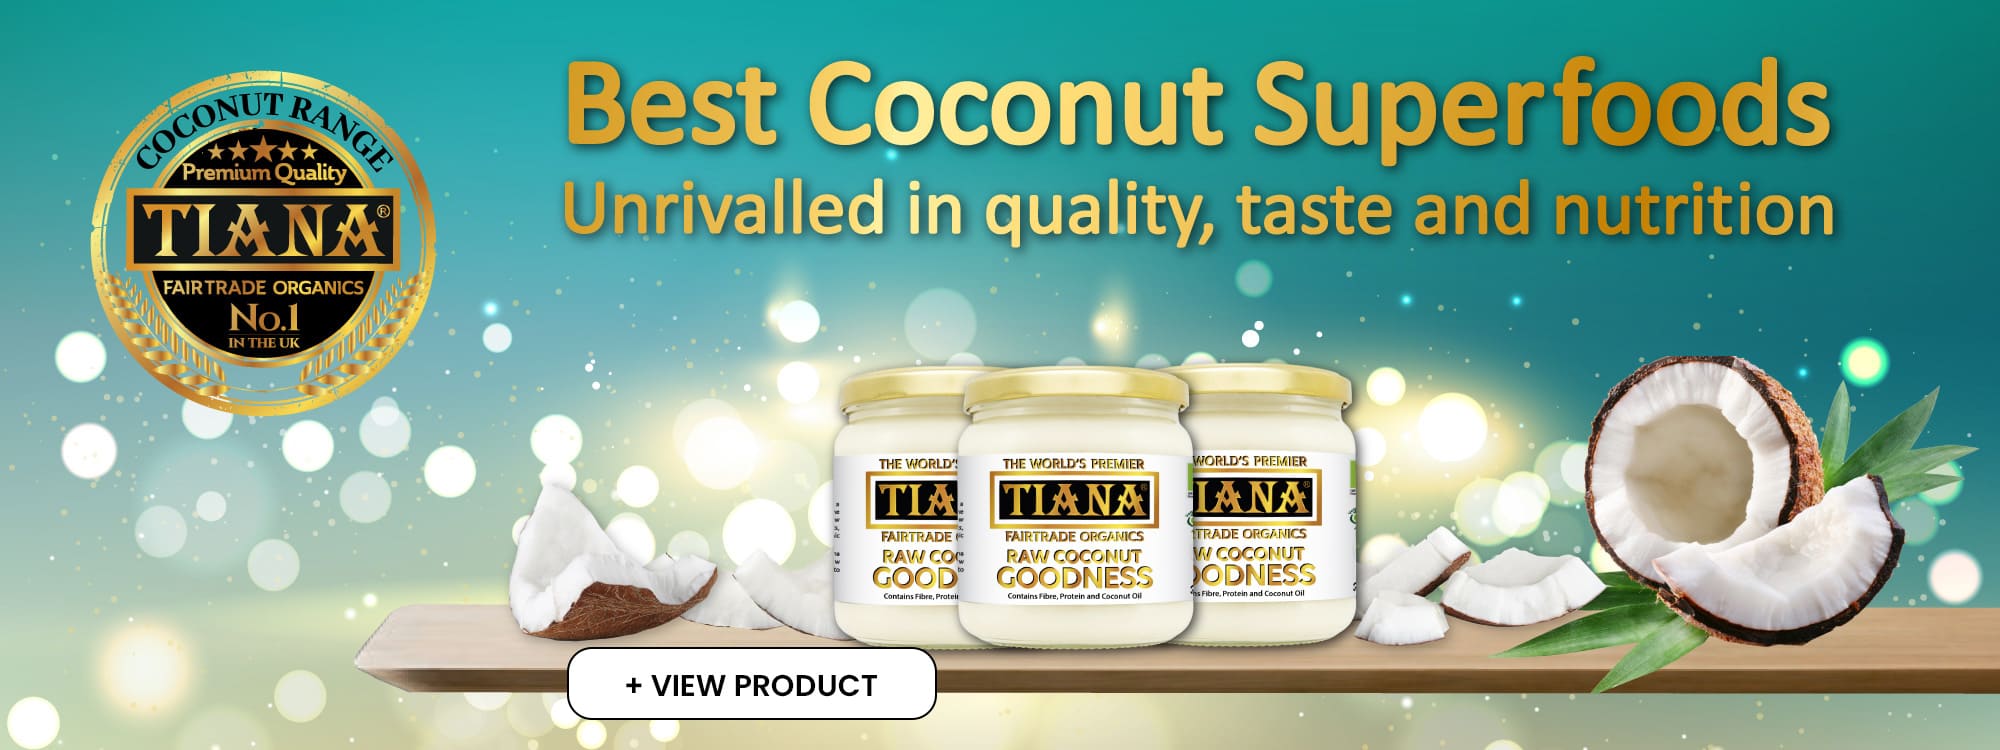 TIANA Fairtrade Organics raw coconut goodness